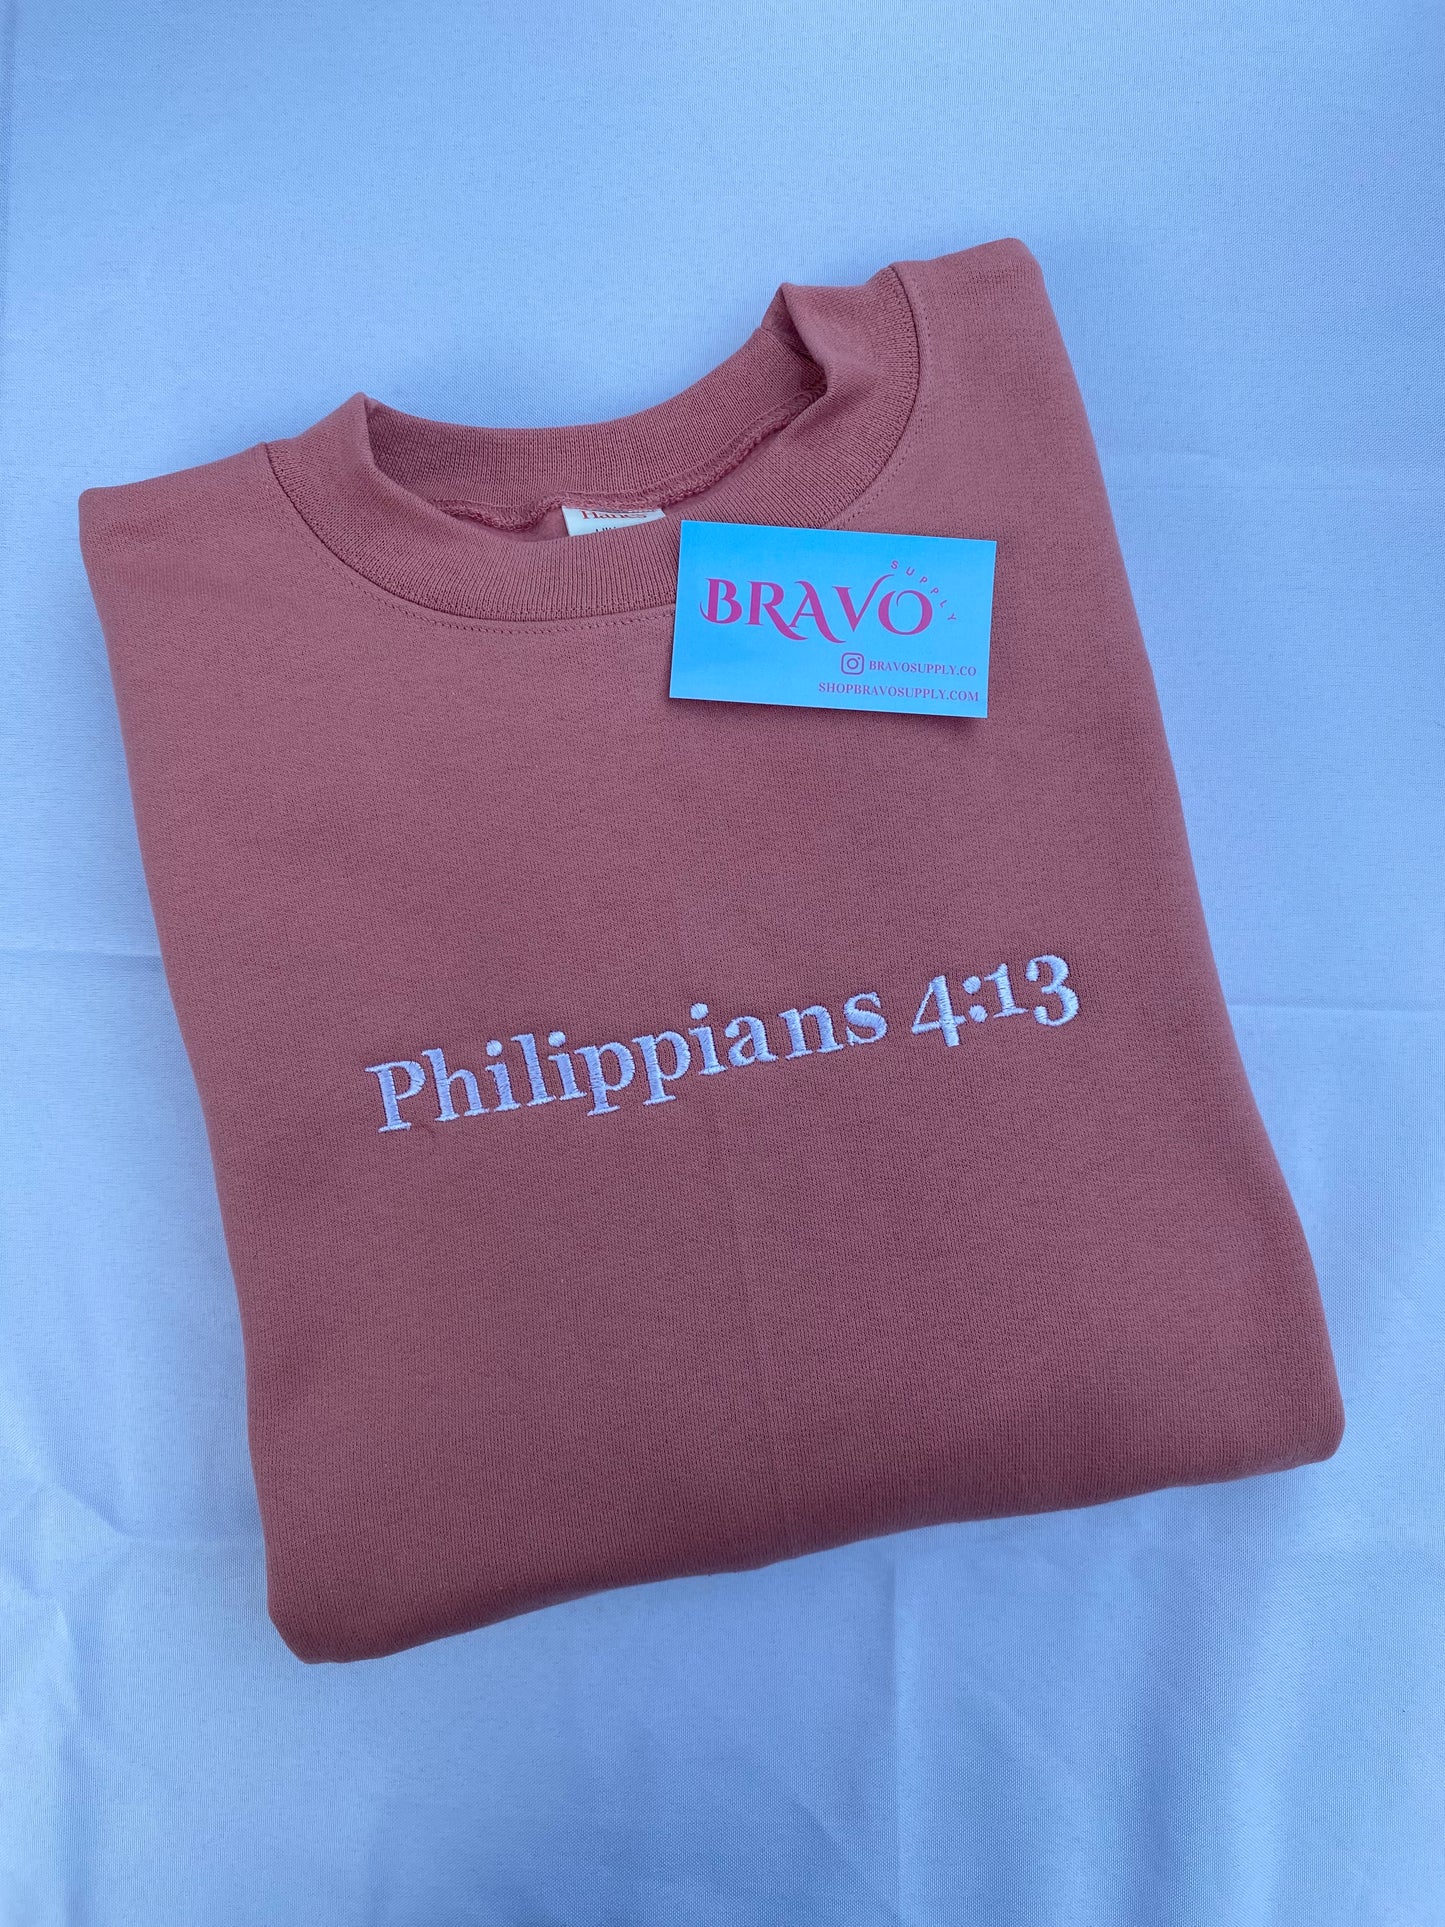 Philippians 4:13 embroidered sweatshirt